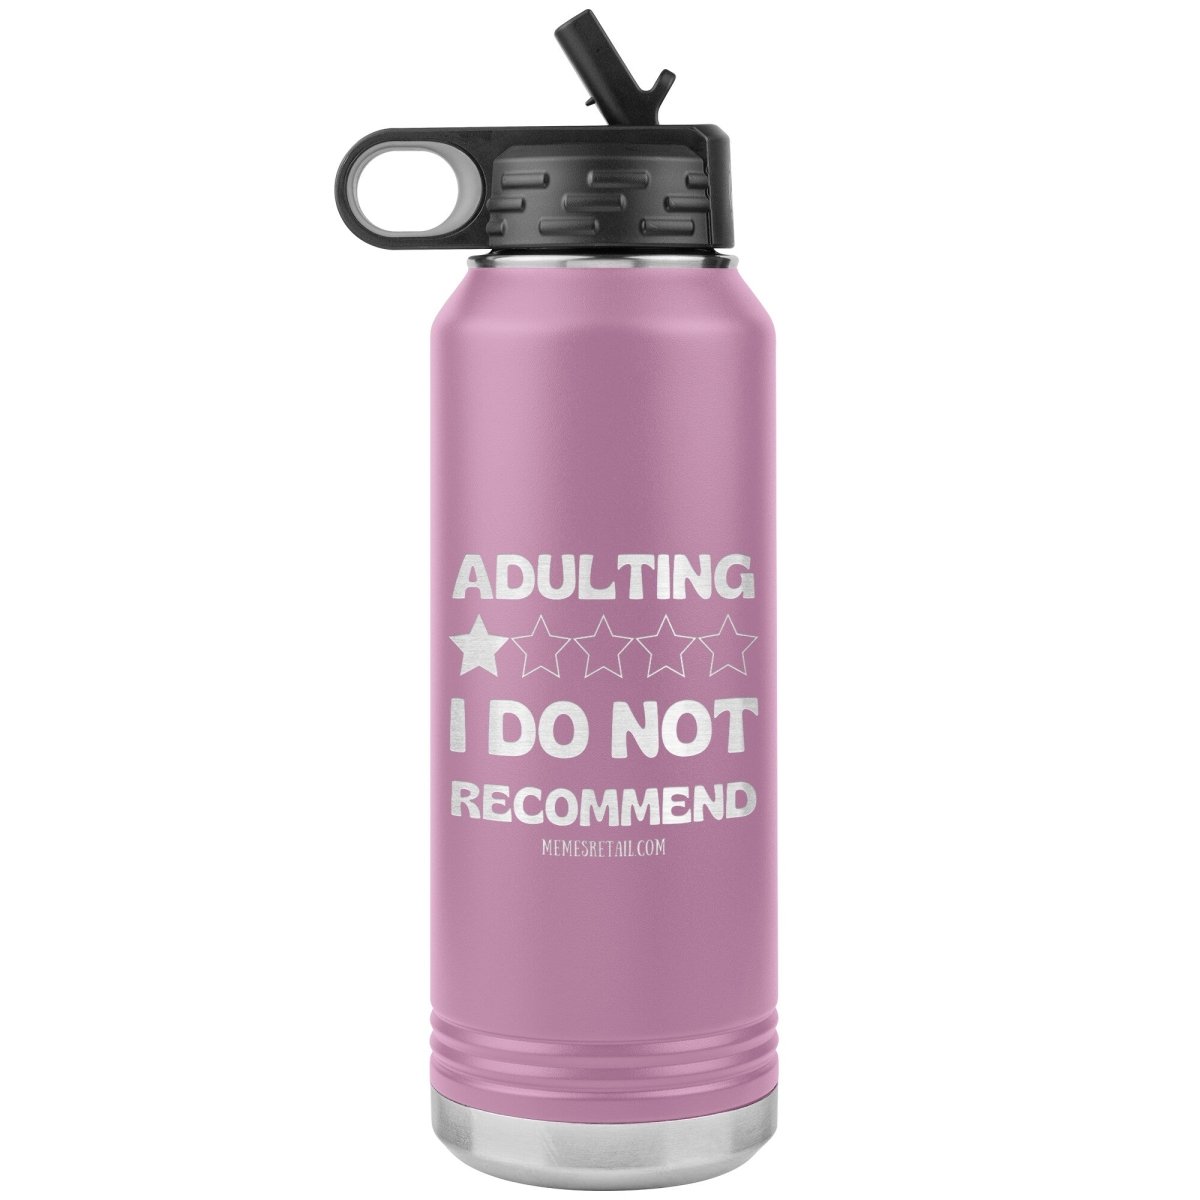 Adulting, 1 Star, I do not recommend 32oz Water Tumblers, Light Purple - MemesRetail.com